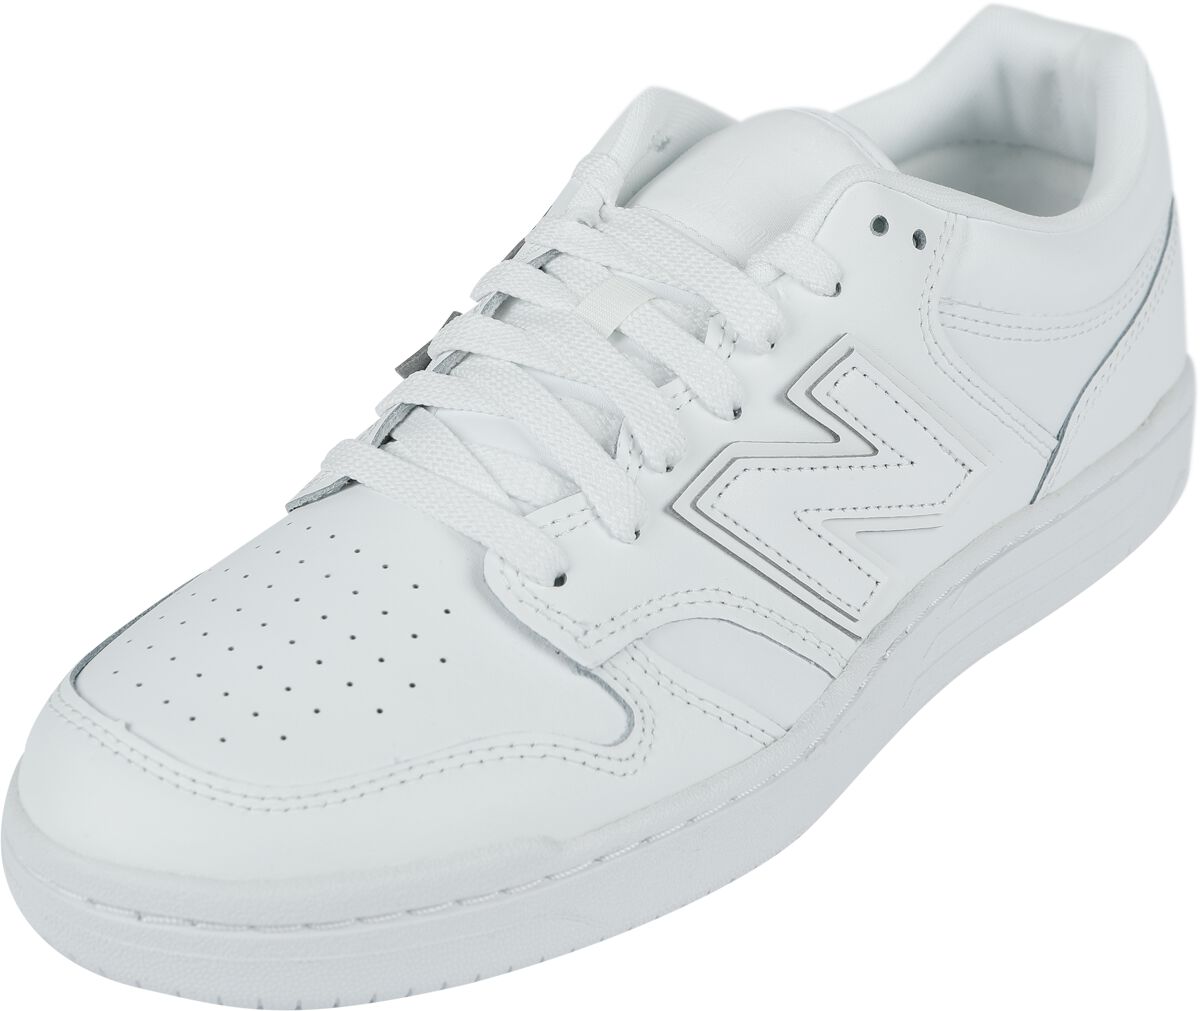 New Balance Sneaker - 480L - EU41 bis 5 - für Männer - Größe EU41,5 - weiß